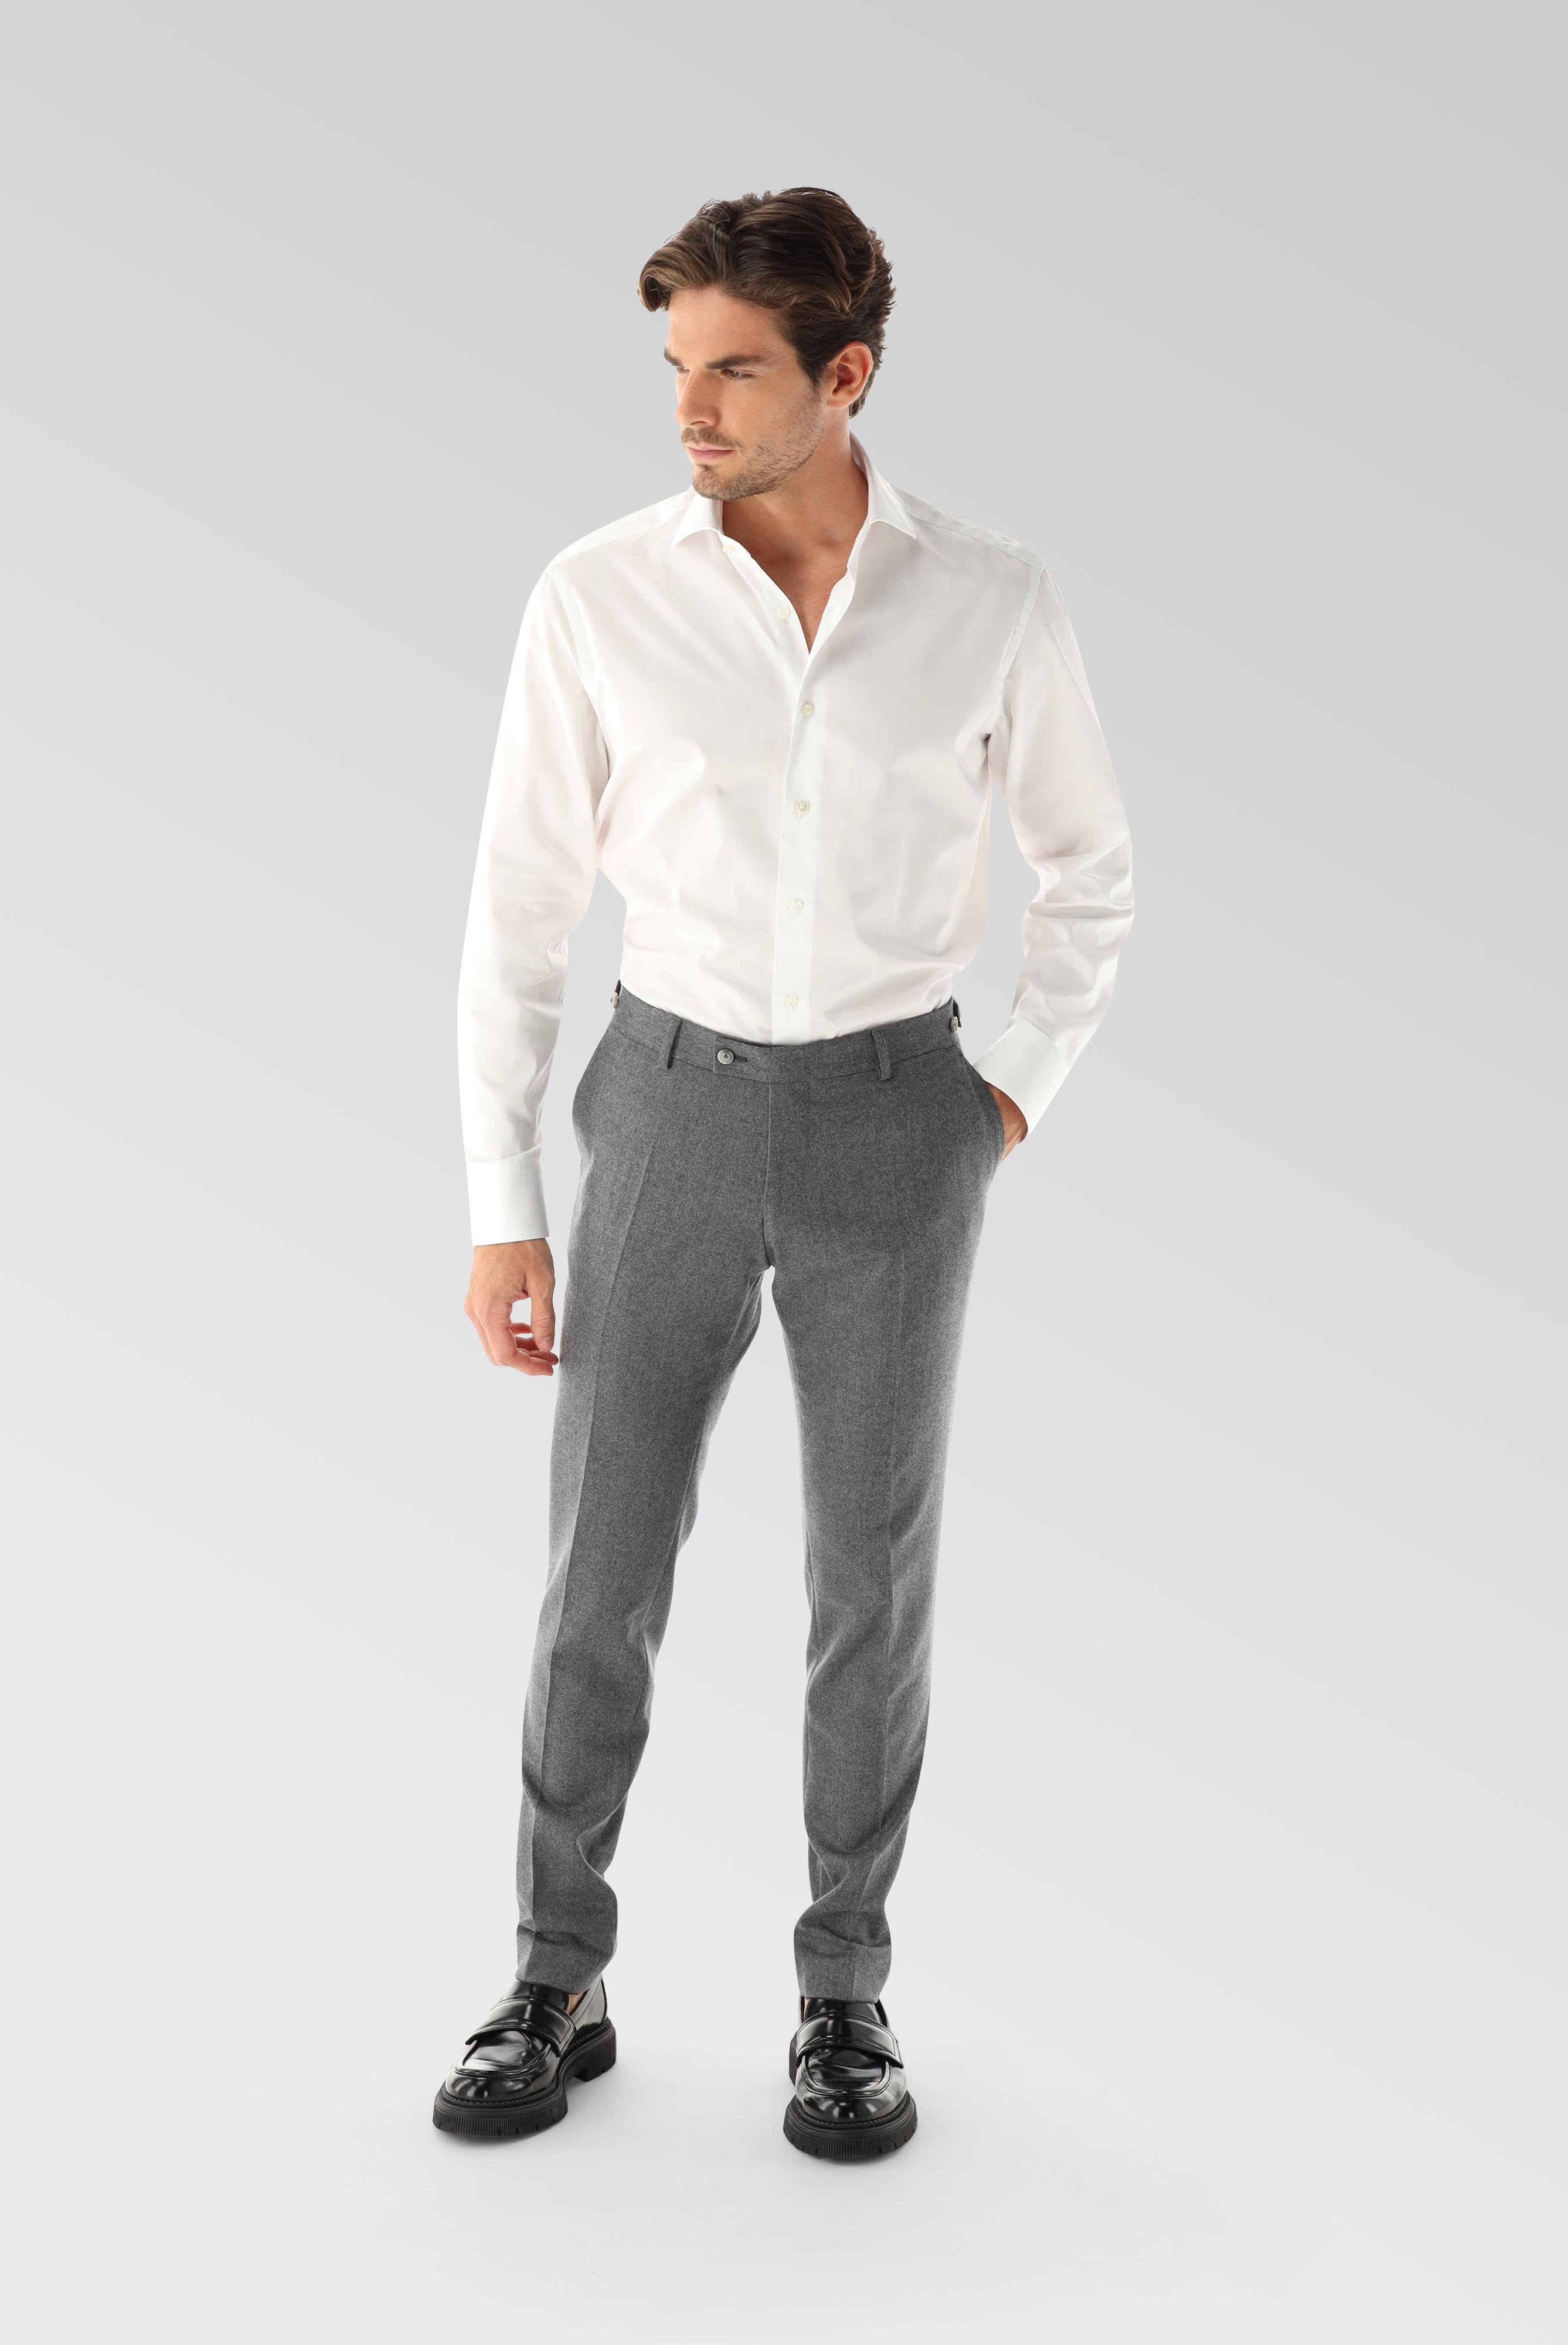 Meisterwerk Hemden+Businesshemd aus Baumwoll-Dobby Tailor Fit+20.2502.NV.130972.000.39